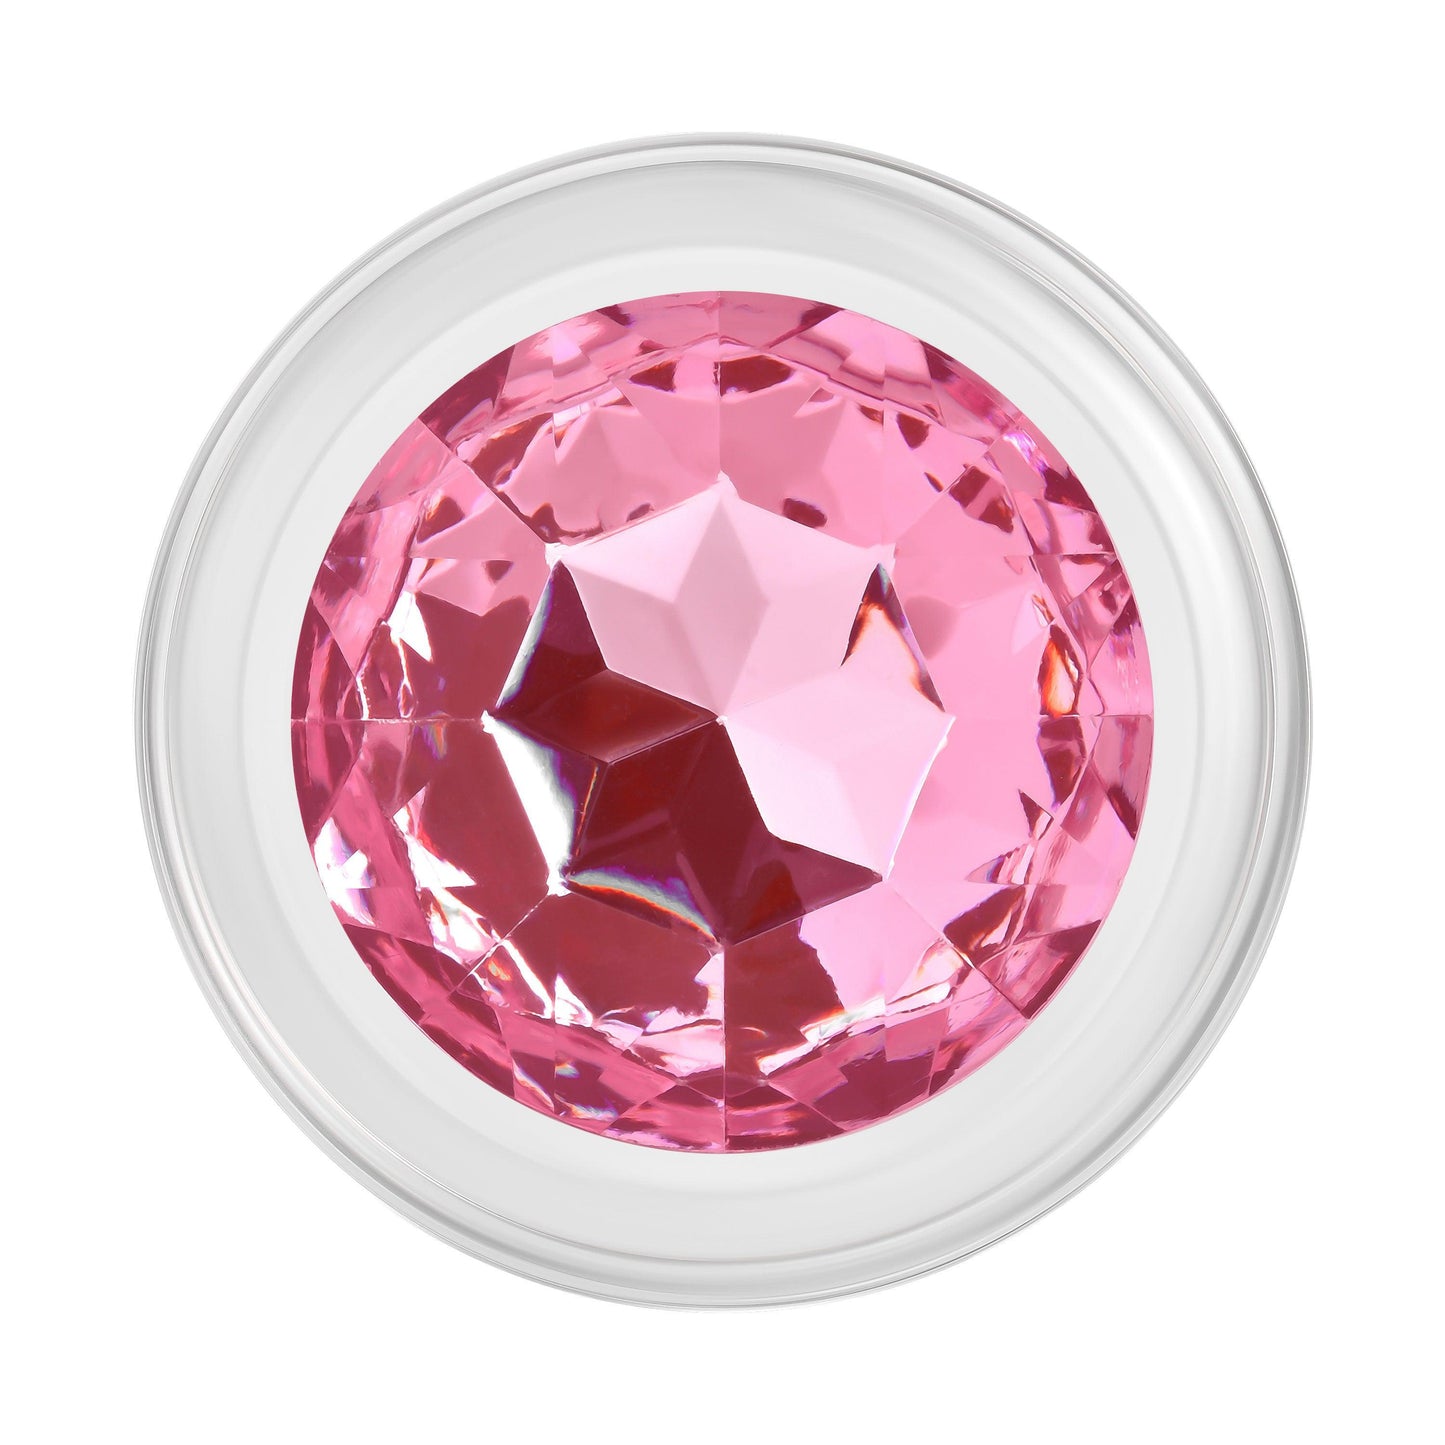 Pink Gem Glass Plug - Medium - Pink